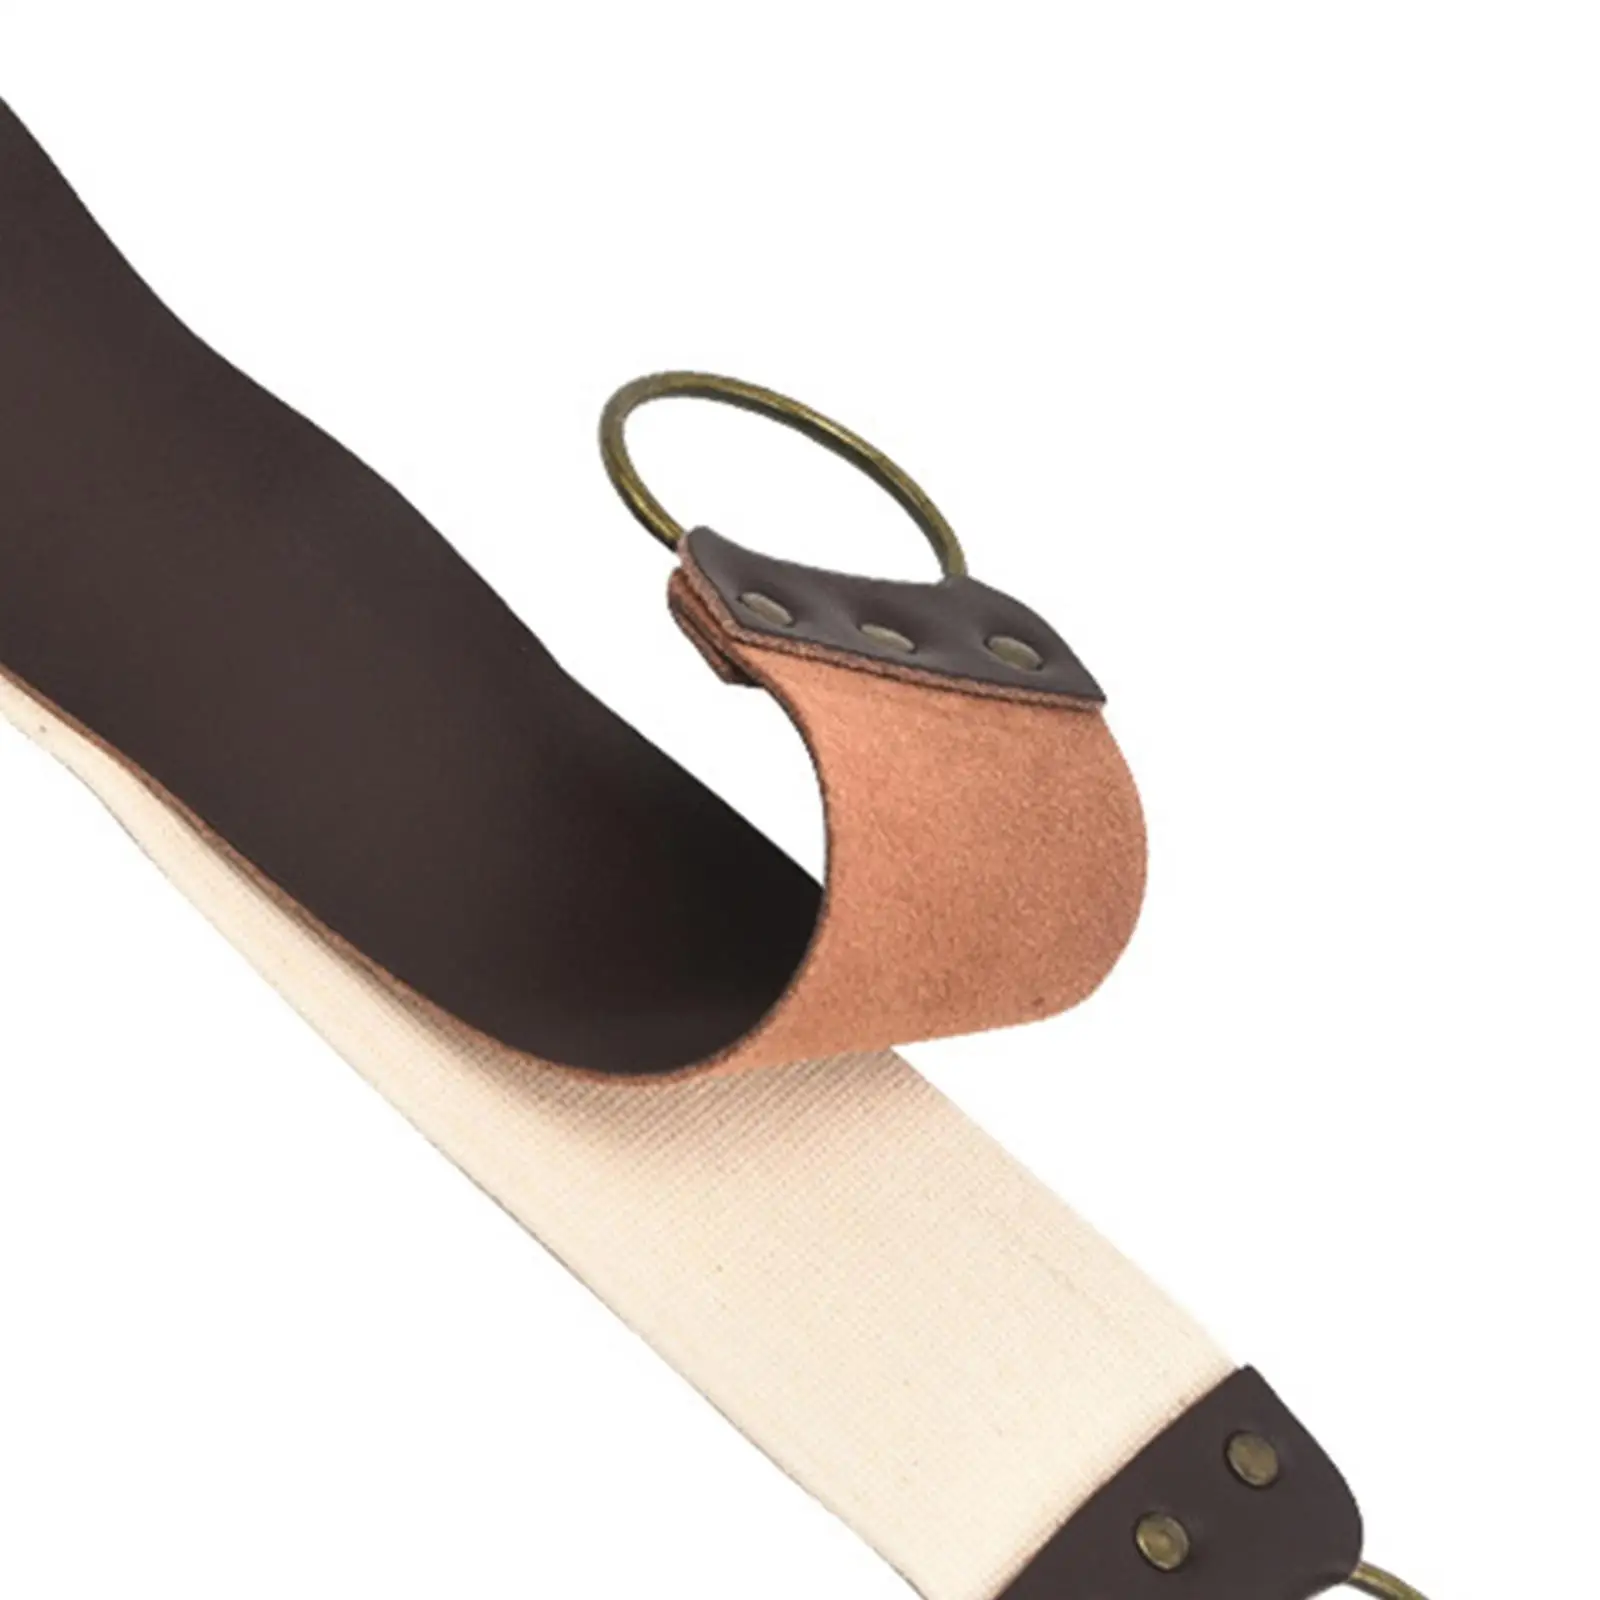 High-Quality Leather Strop Belt for Effortless Blade Sharpening - Professional Shaving Essential